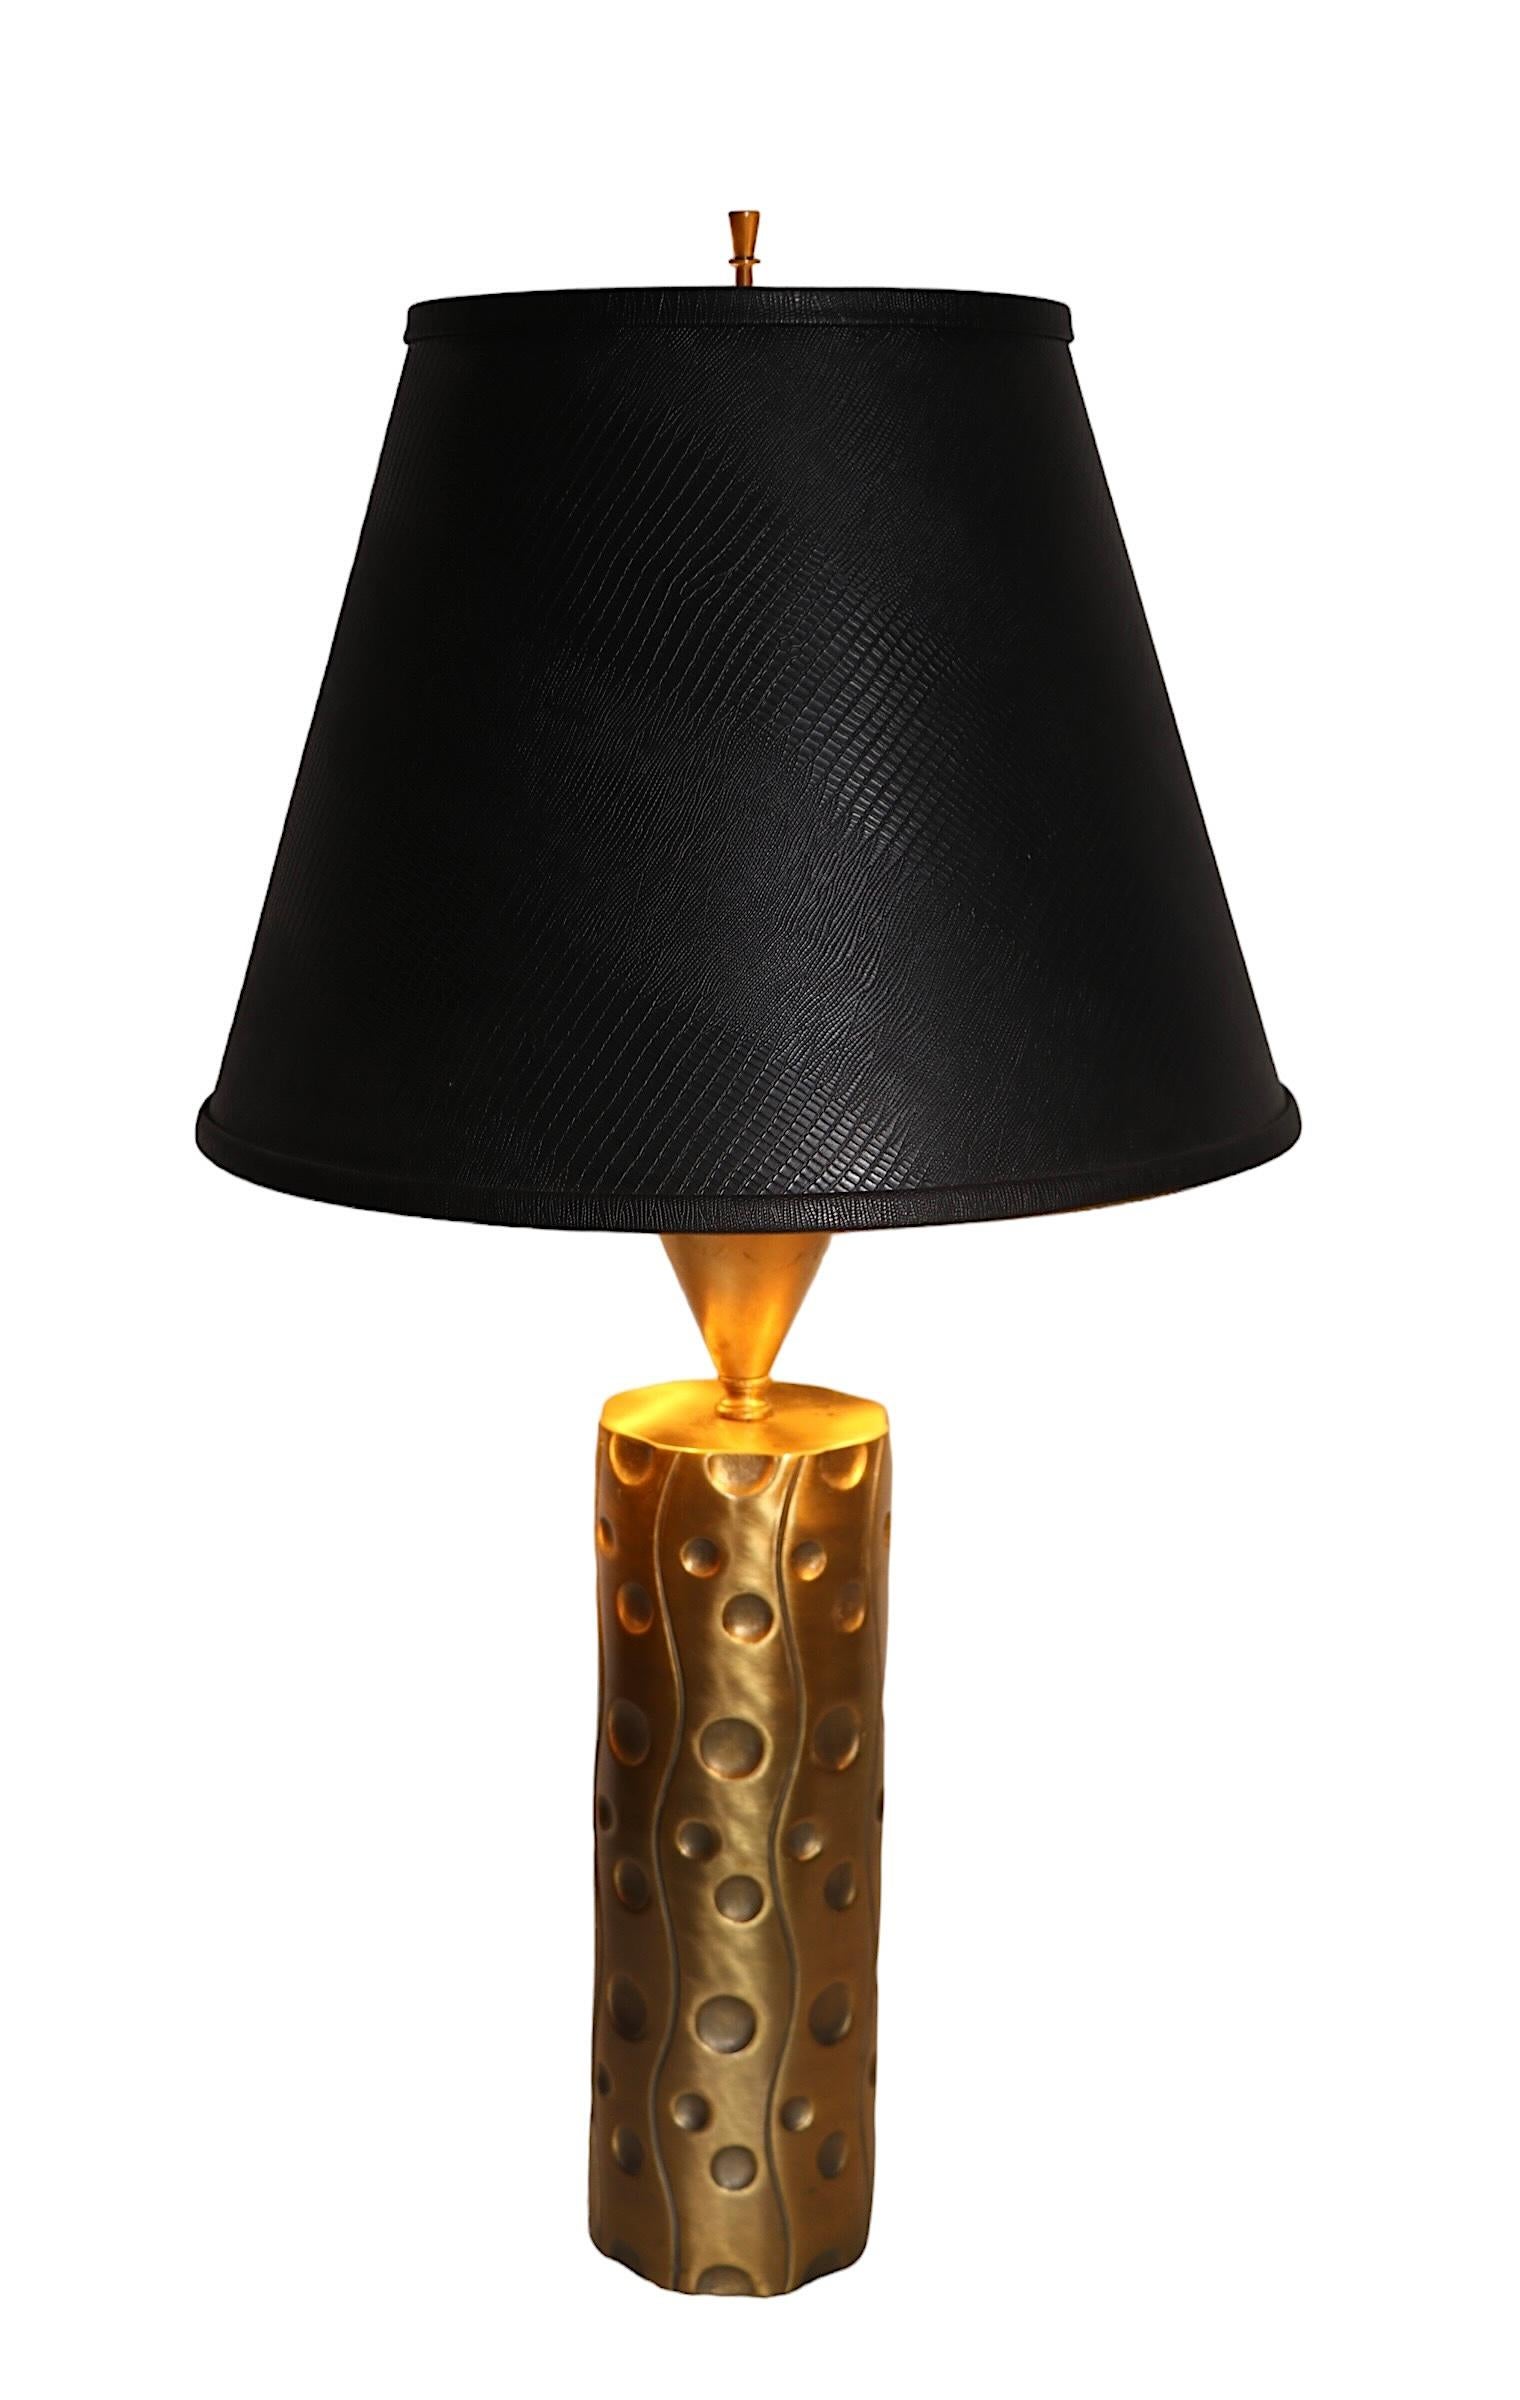  Westwood Table Lamp att. Tony Paul c. 1950/1970's  For Sale 4